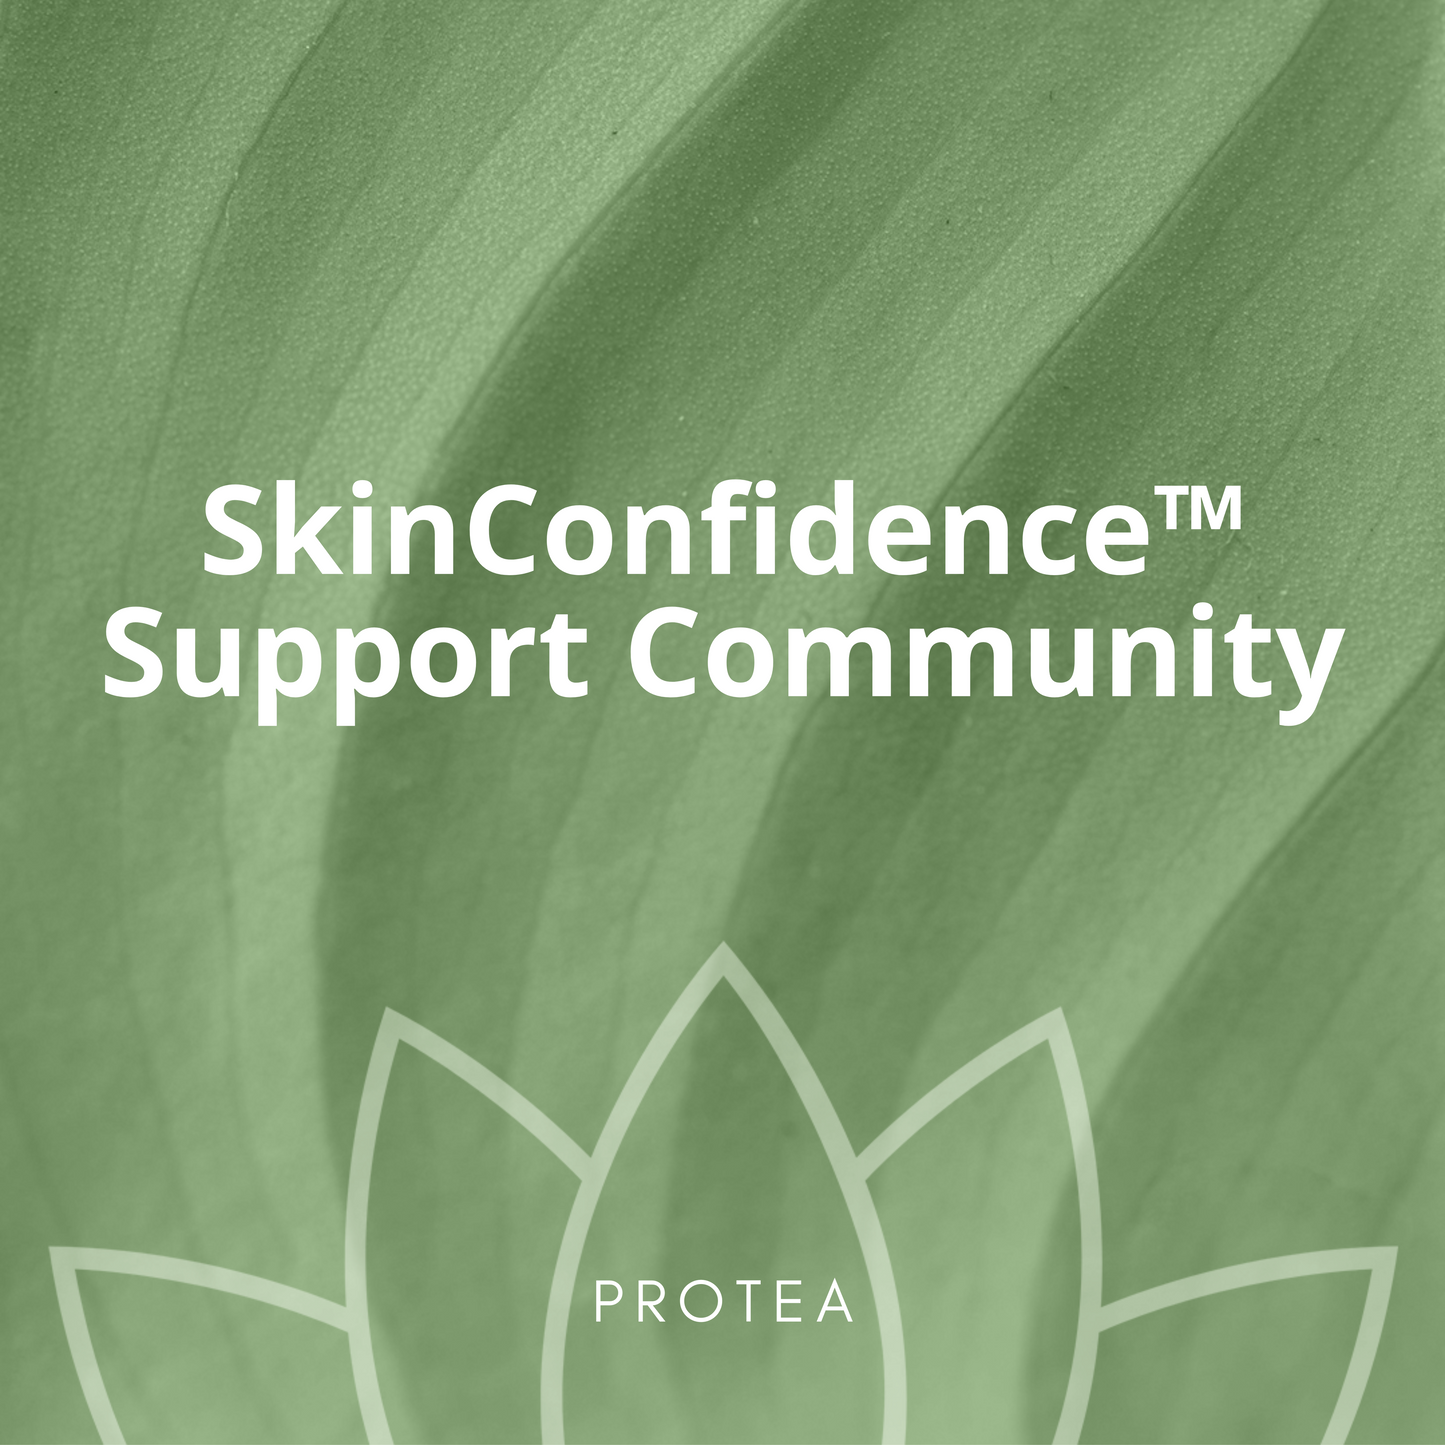 Annual Membership to SkinConfidence™ Community